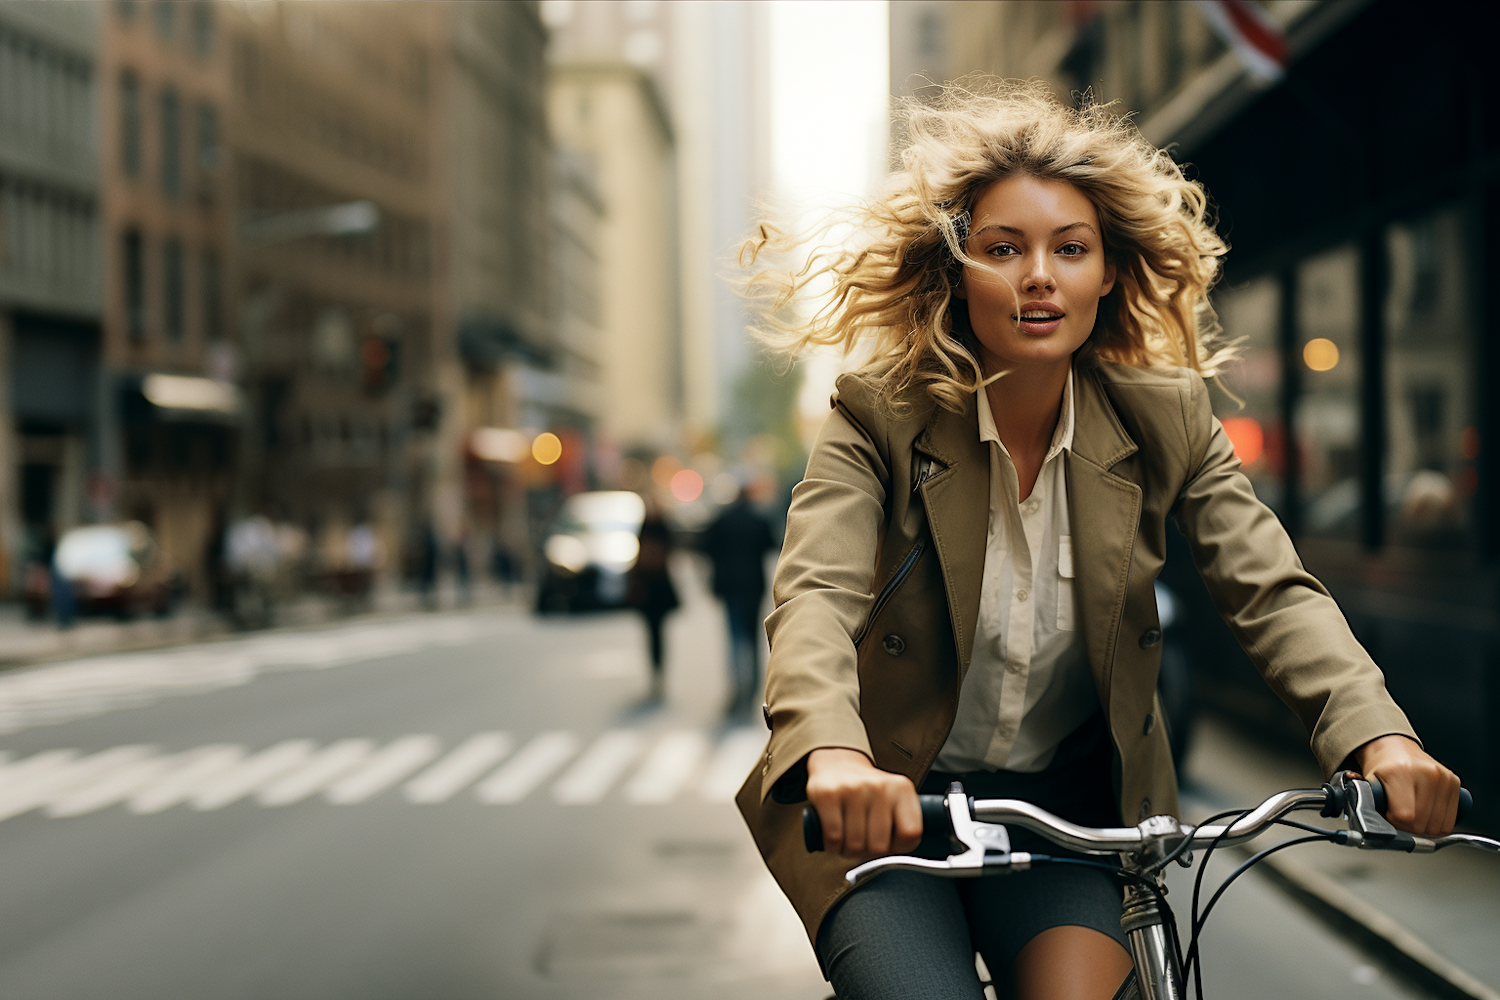 Urban Energy - The Commuting Cyclist